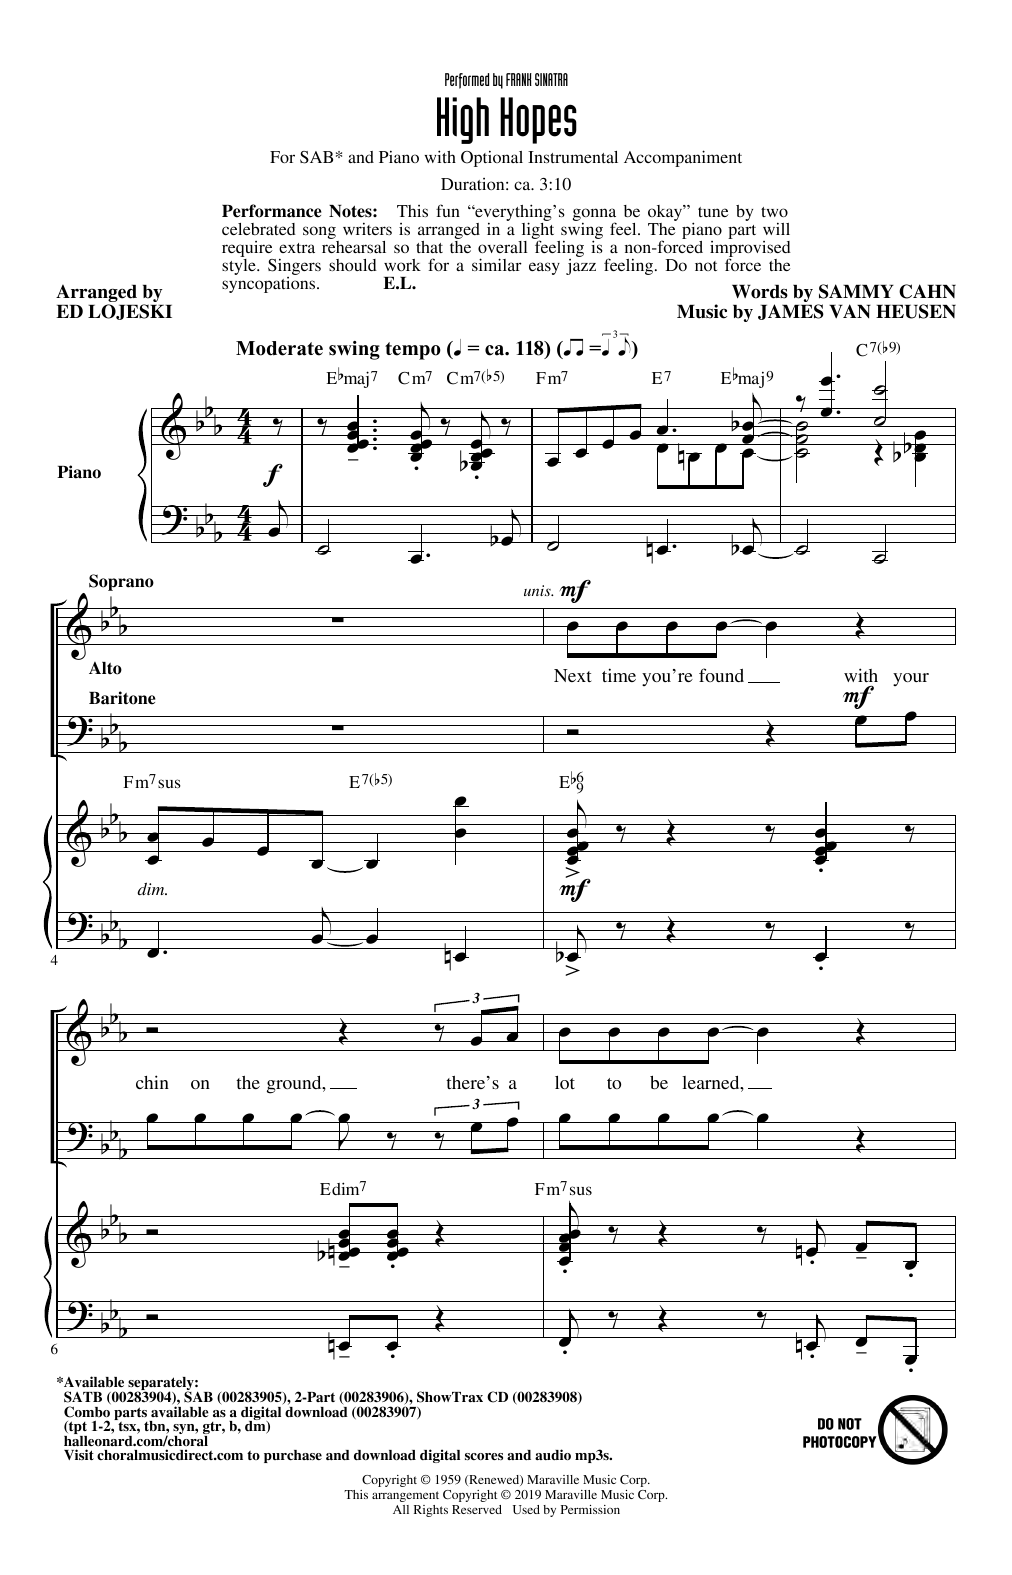 Frank Sinatra High Hopes (arr. Ed Lojeski) Sheet Music Notes & Chords for SATB Choir - Download or Print PDF